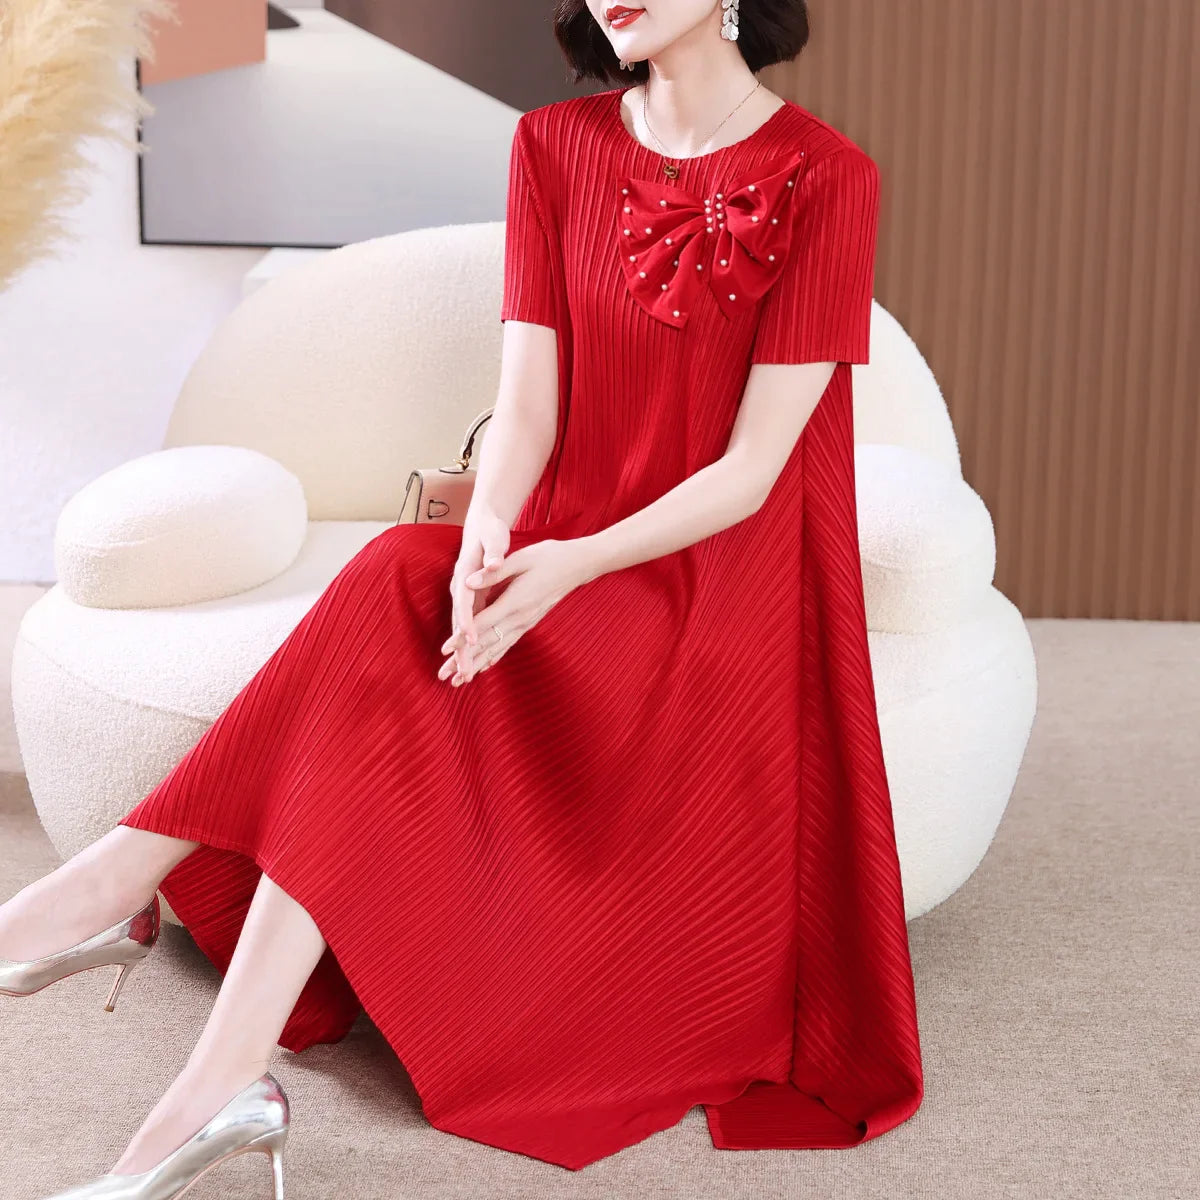 Canmol Elegant Red Pleated Dress Short Sleeve Summer Formal Wedding Plus Size Women's Fashion